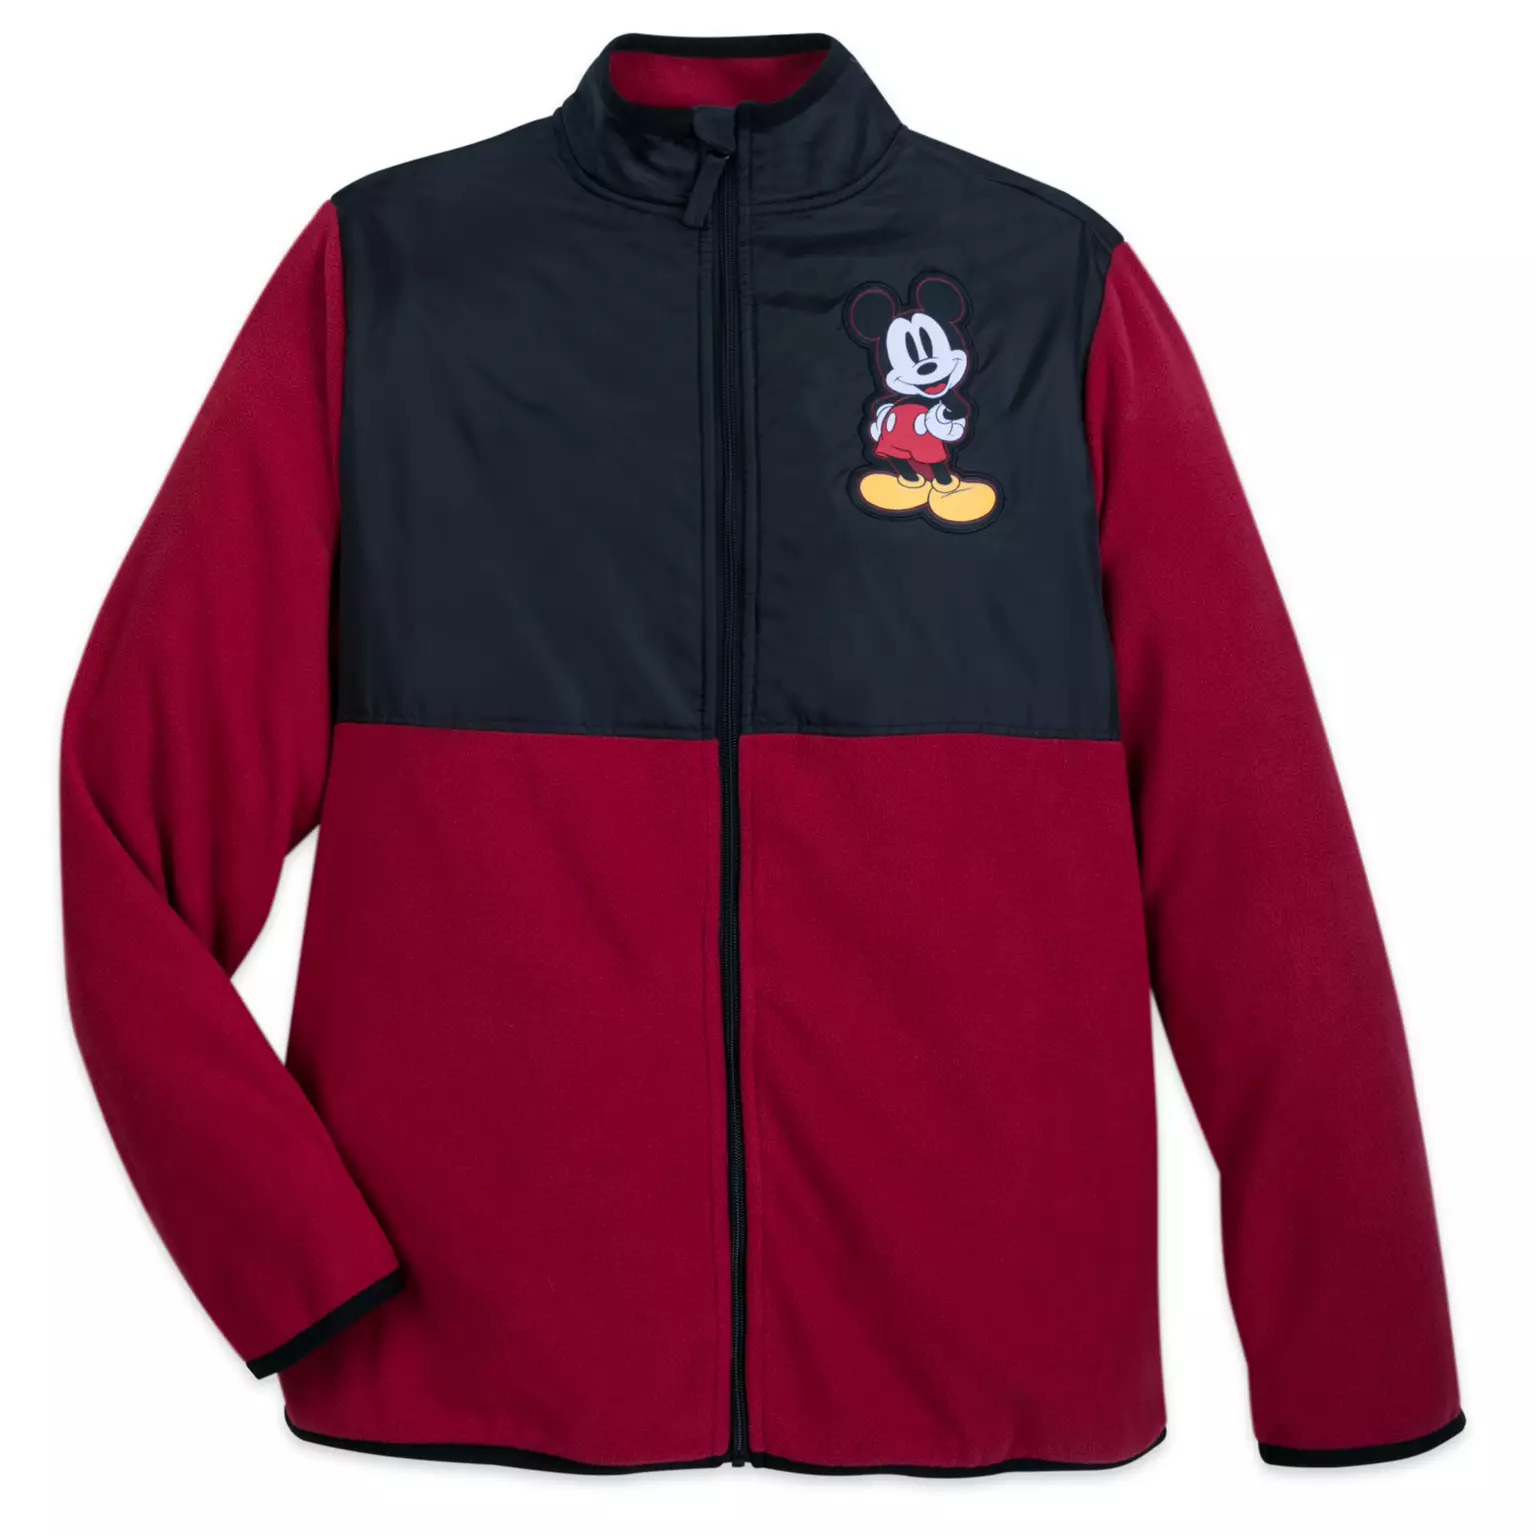 Disney Mickey Mouse Pieced Fleece Jacket for Adults - Size XXL - New